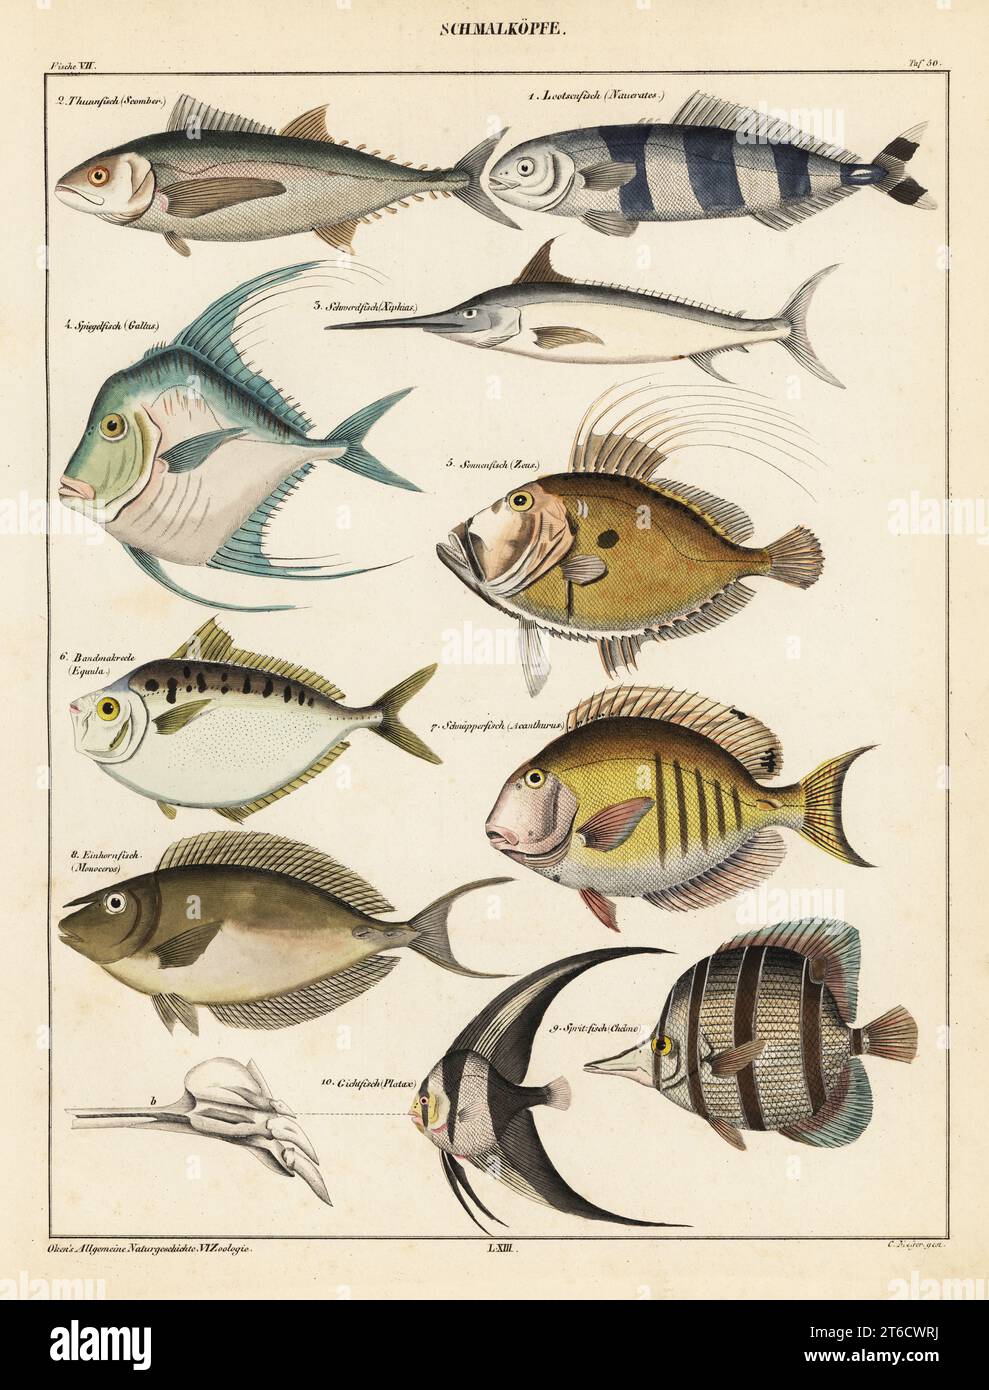 Varieties of fish. Plate 50. Schmalkopfe: 1 pilot fish, Naucrates ductor, Lootsenfisch, 2 endangered Atlantic bluefin tuna, Thunnus thynnus, Thunnfisch, 3 swordfish, Xiphias gladius, Schwerdfisch, 4 African pompano, Alectis ciliaris, Spiegelfisch, 5 John Dory, Zeus faber, Sonnenfisch, 6 pugnose ponyfish, Secutor insidiator, Bandmakreele, 7 doctorfish, Ananthurus chirurgus, Schnapperfisch, 8 unicorn leatherjacket, Aluterus monoceros, Einhornfisc, 9 copperband butterflyfish, Chelmon rostratus, Spritzfisch, 10 teira batfish, Platax teira, Gichtfisch. Handcoloured lithograph by C. Meyer from Loren Stock Photo